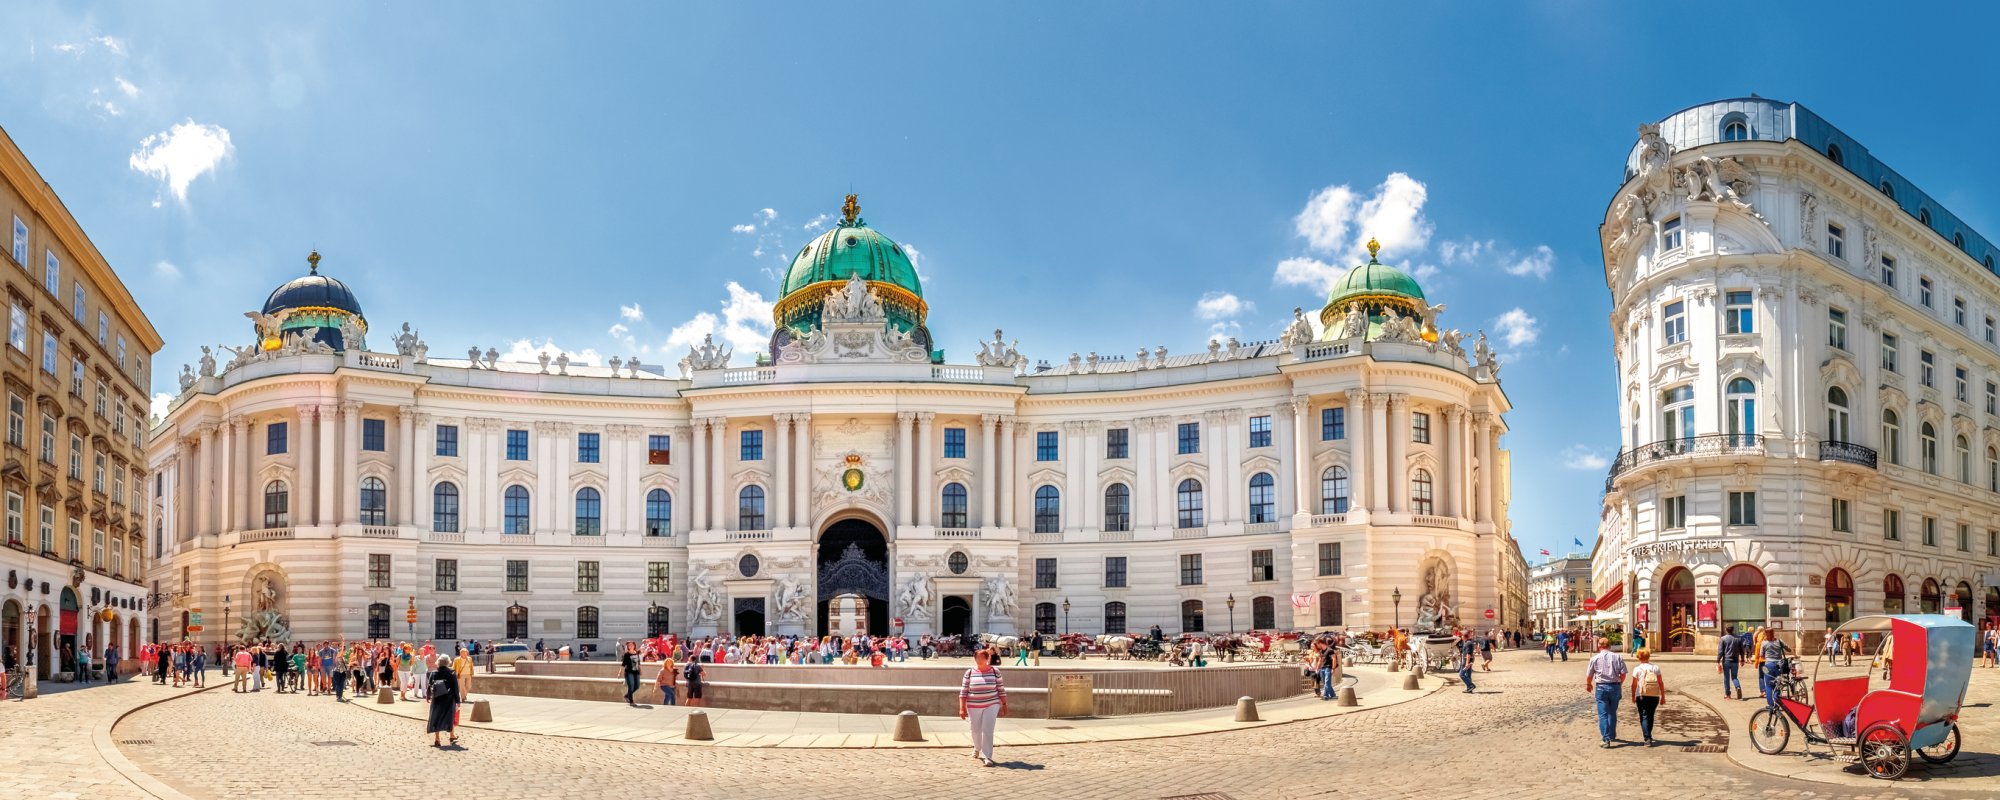 Alte Hofburg in Wien